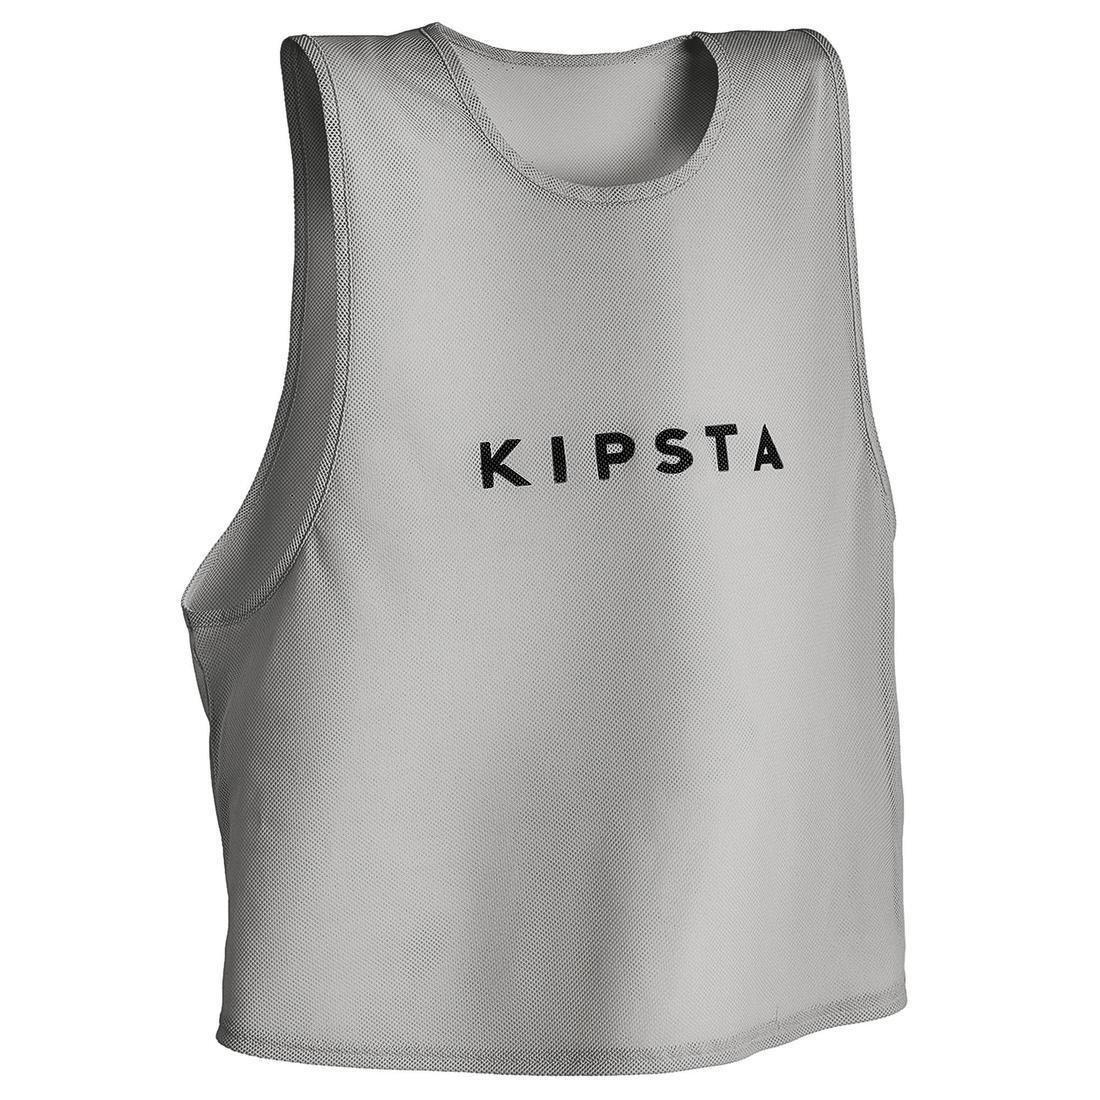 KIPSTA - Adult Bib, Fluo Blood Orange